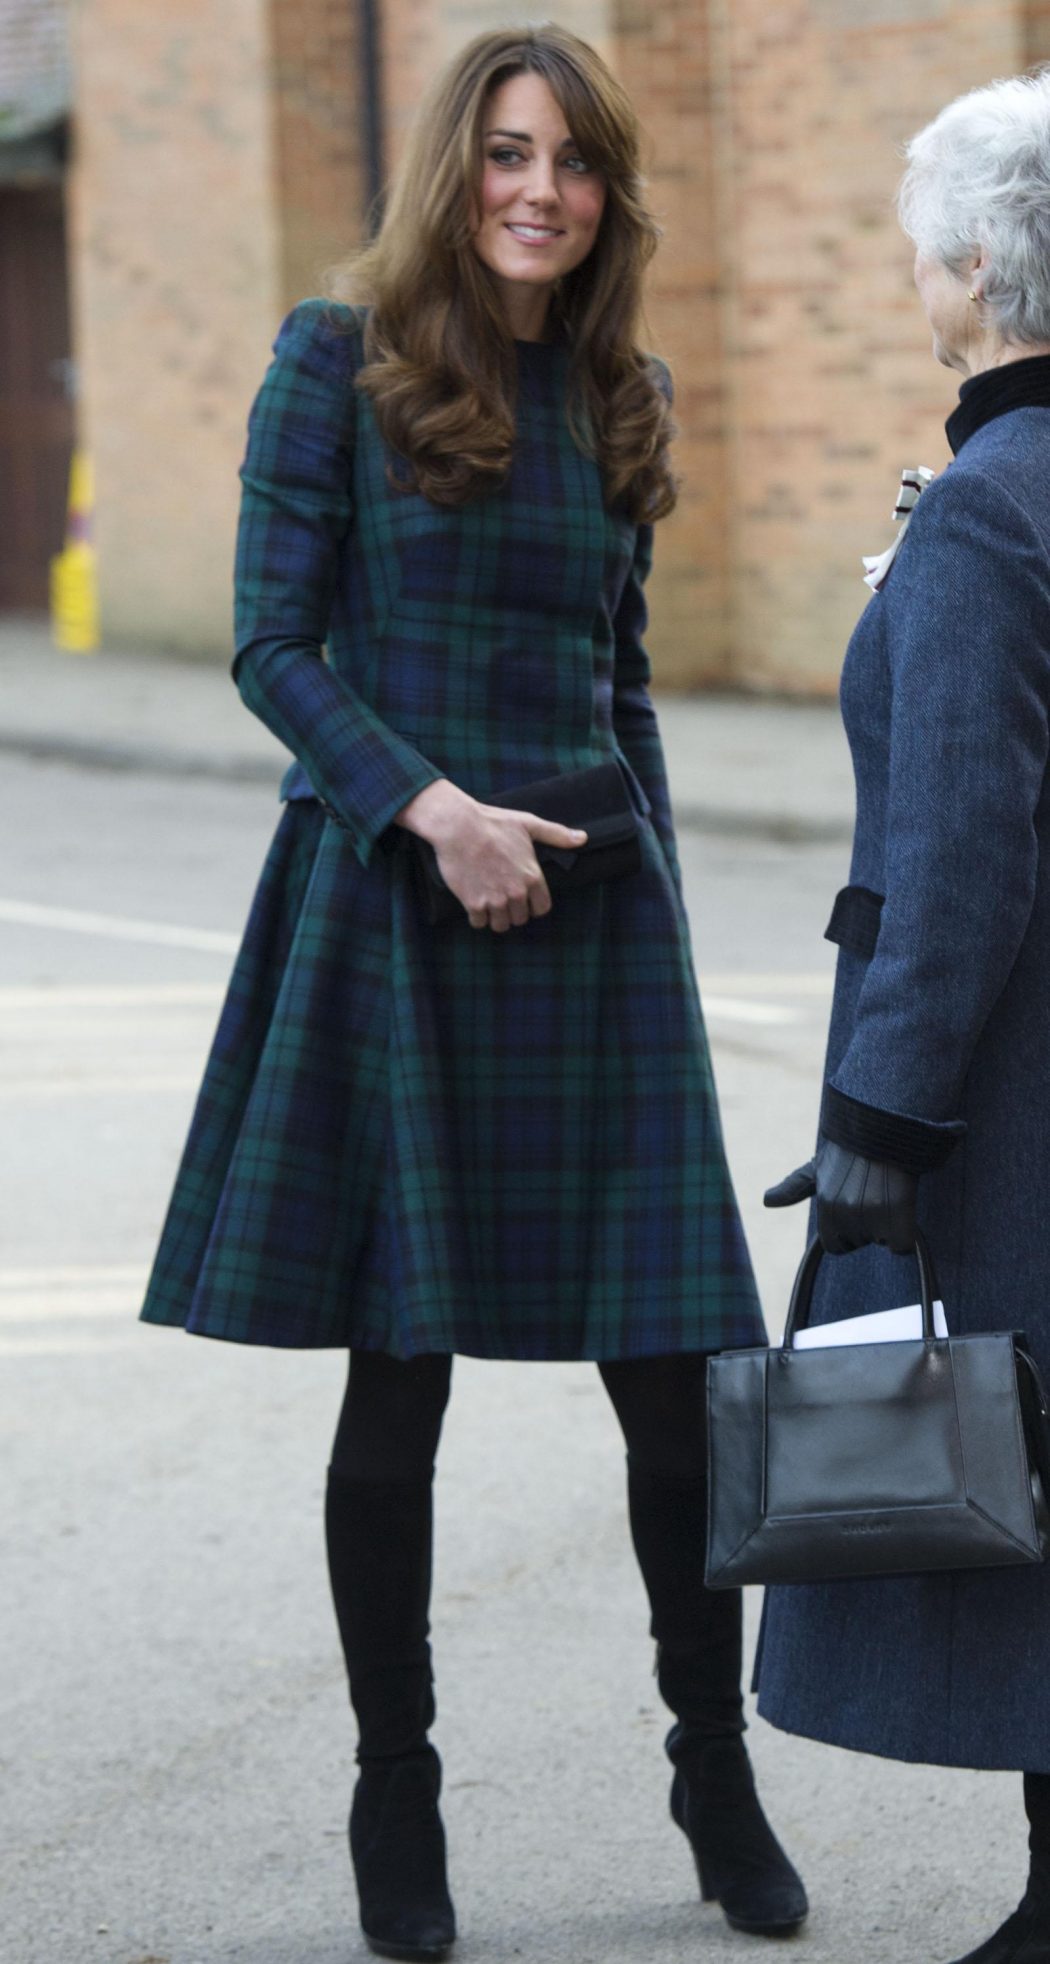 Duchess of Cambridge Visits St Andrew's School